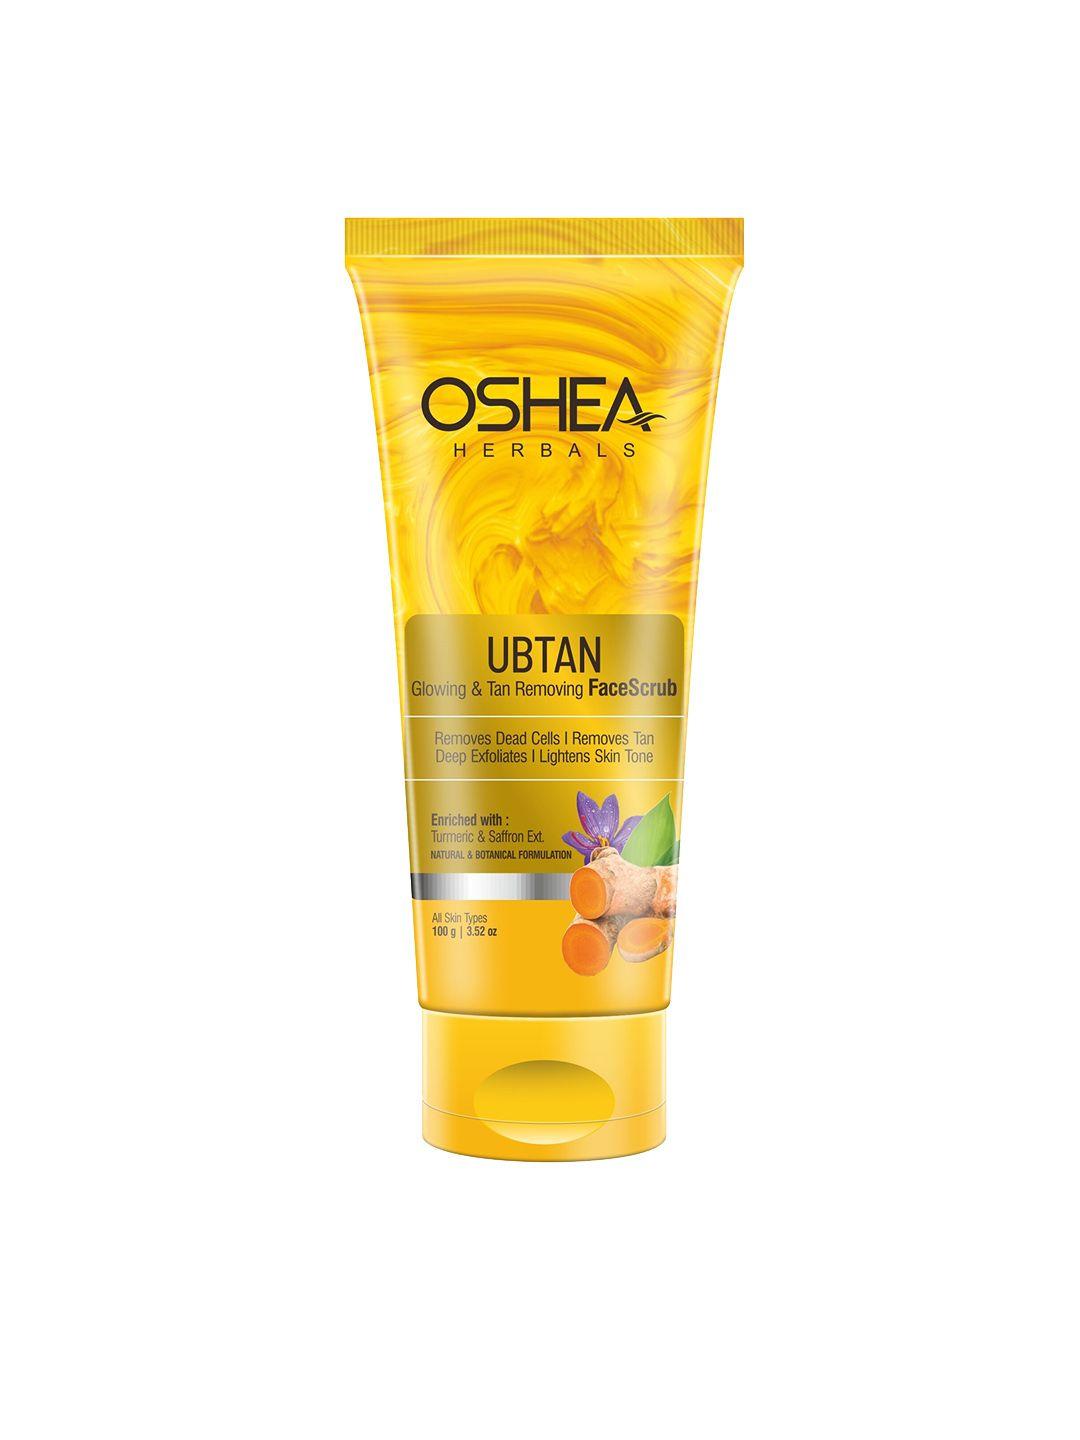 oshea herbals ubtan glowing & tan removing face scrub 100g